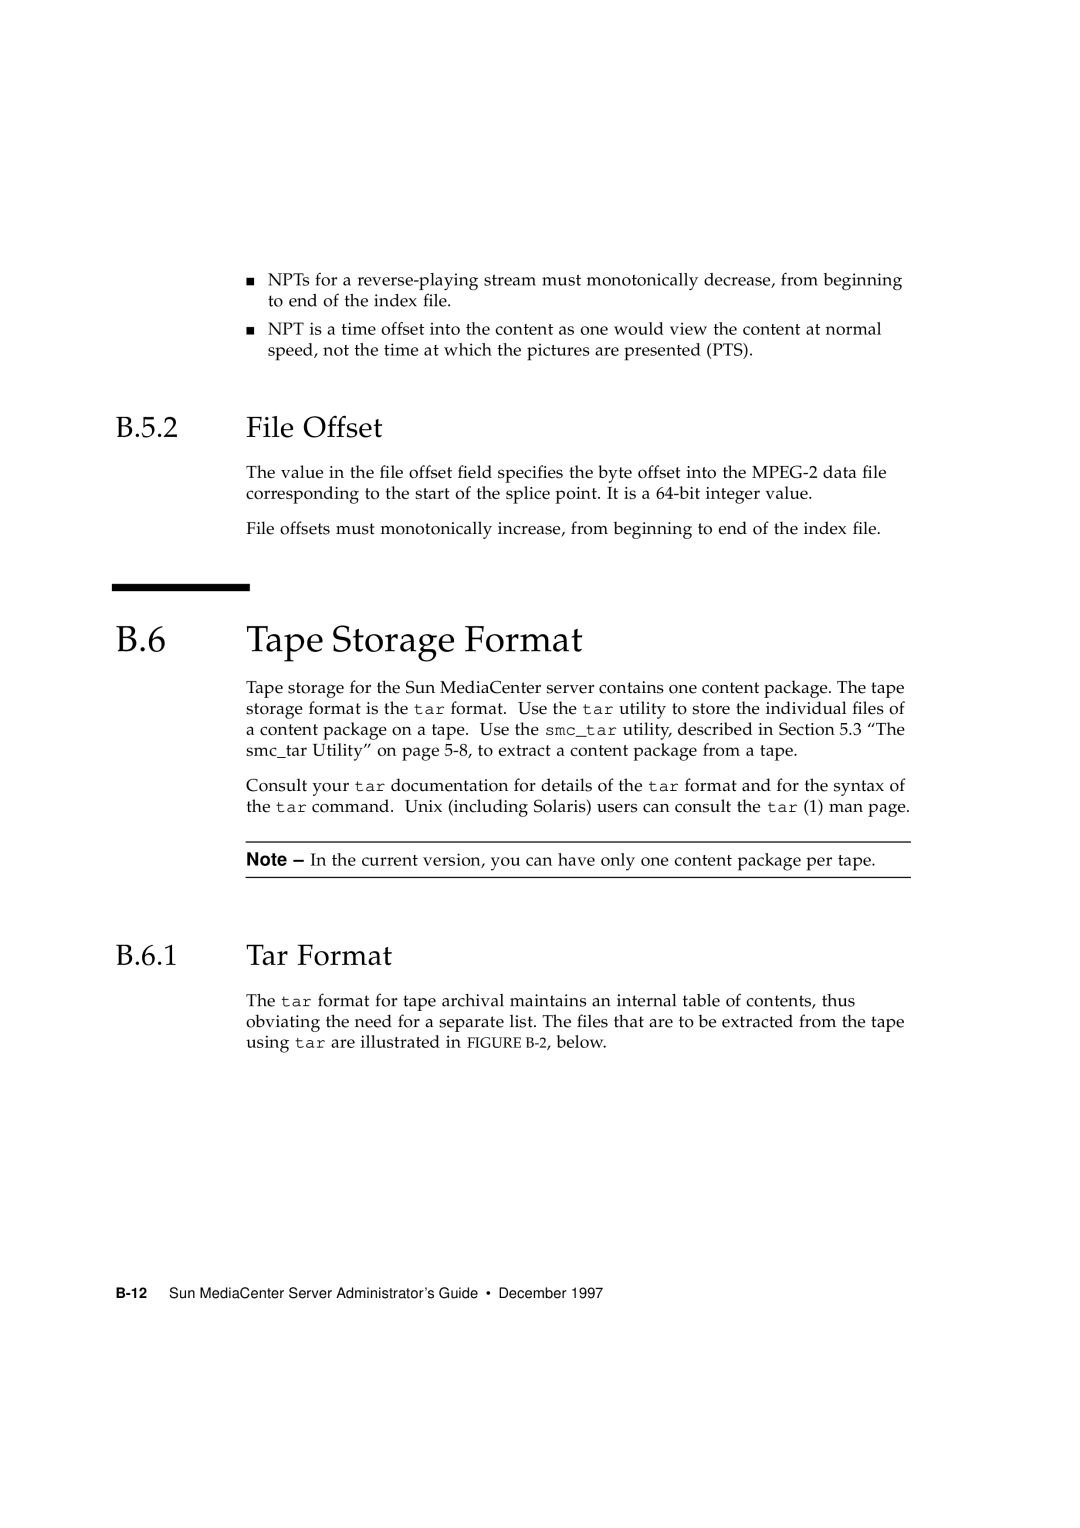 Sun Microsystems 2.1 manual B.6 Tape Storage Format, B.5.2 File Offset, B.6.1 Tar Format 